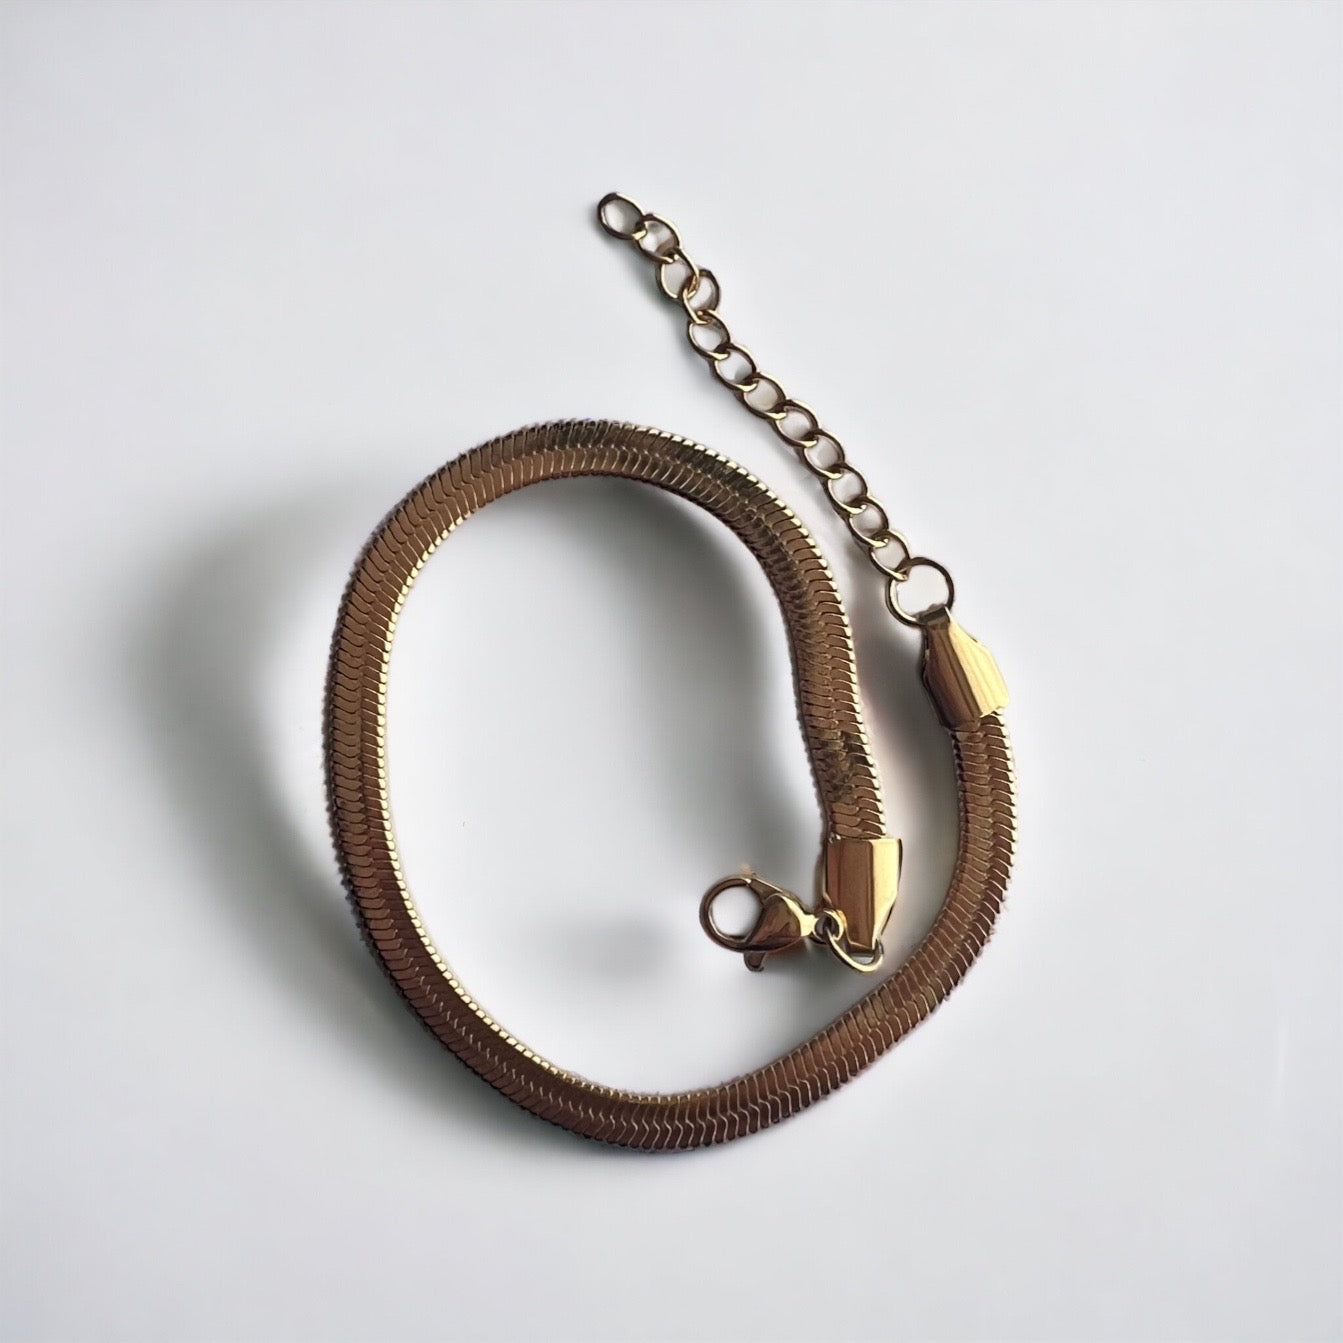 lui jewelry snake chain bracelet ルイジュエリー-